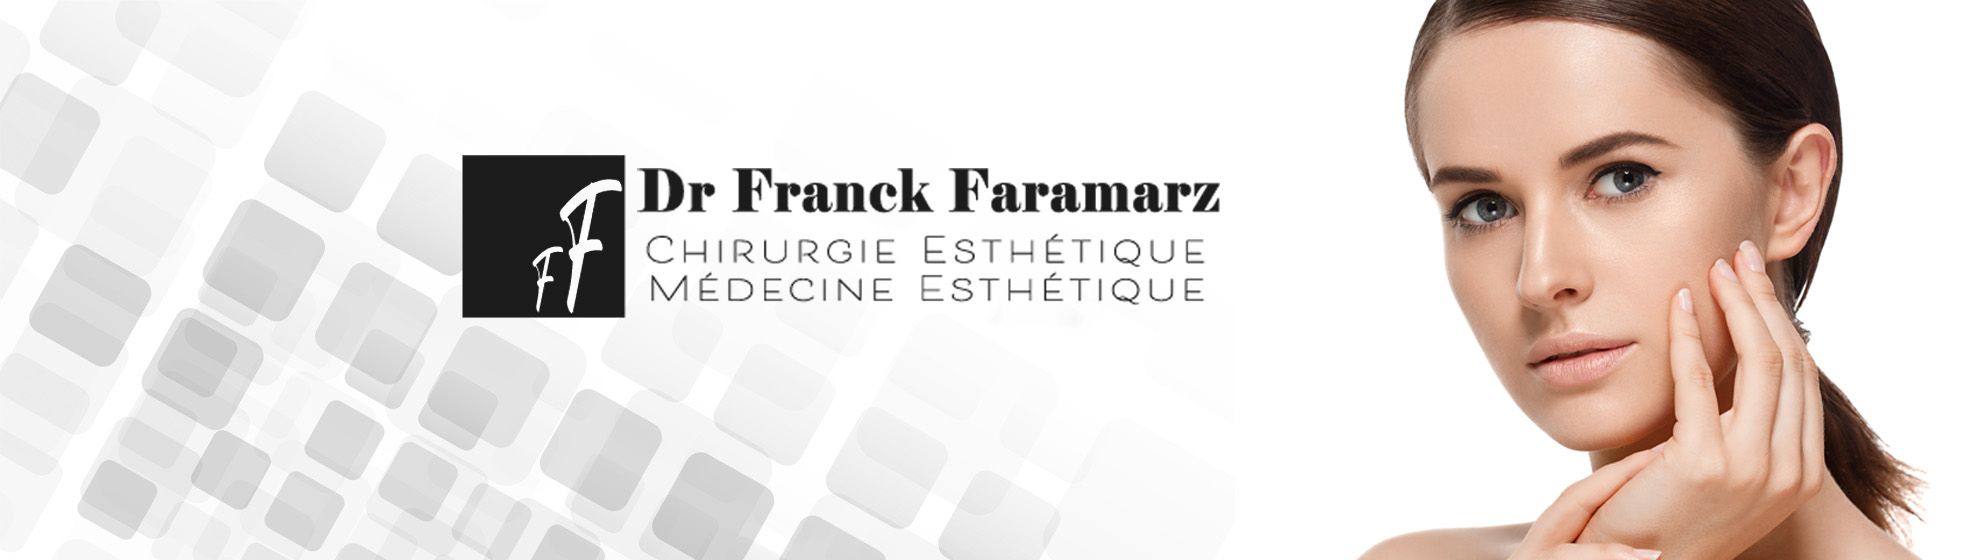 Dr Franck Faramarz